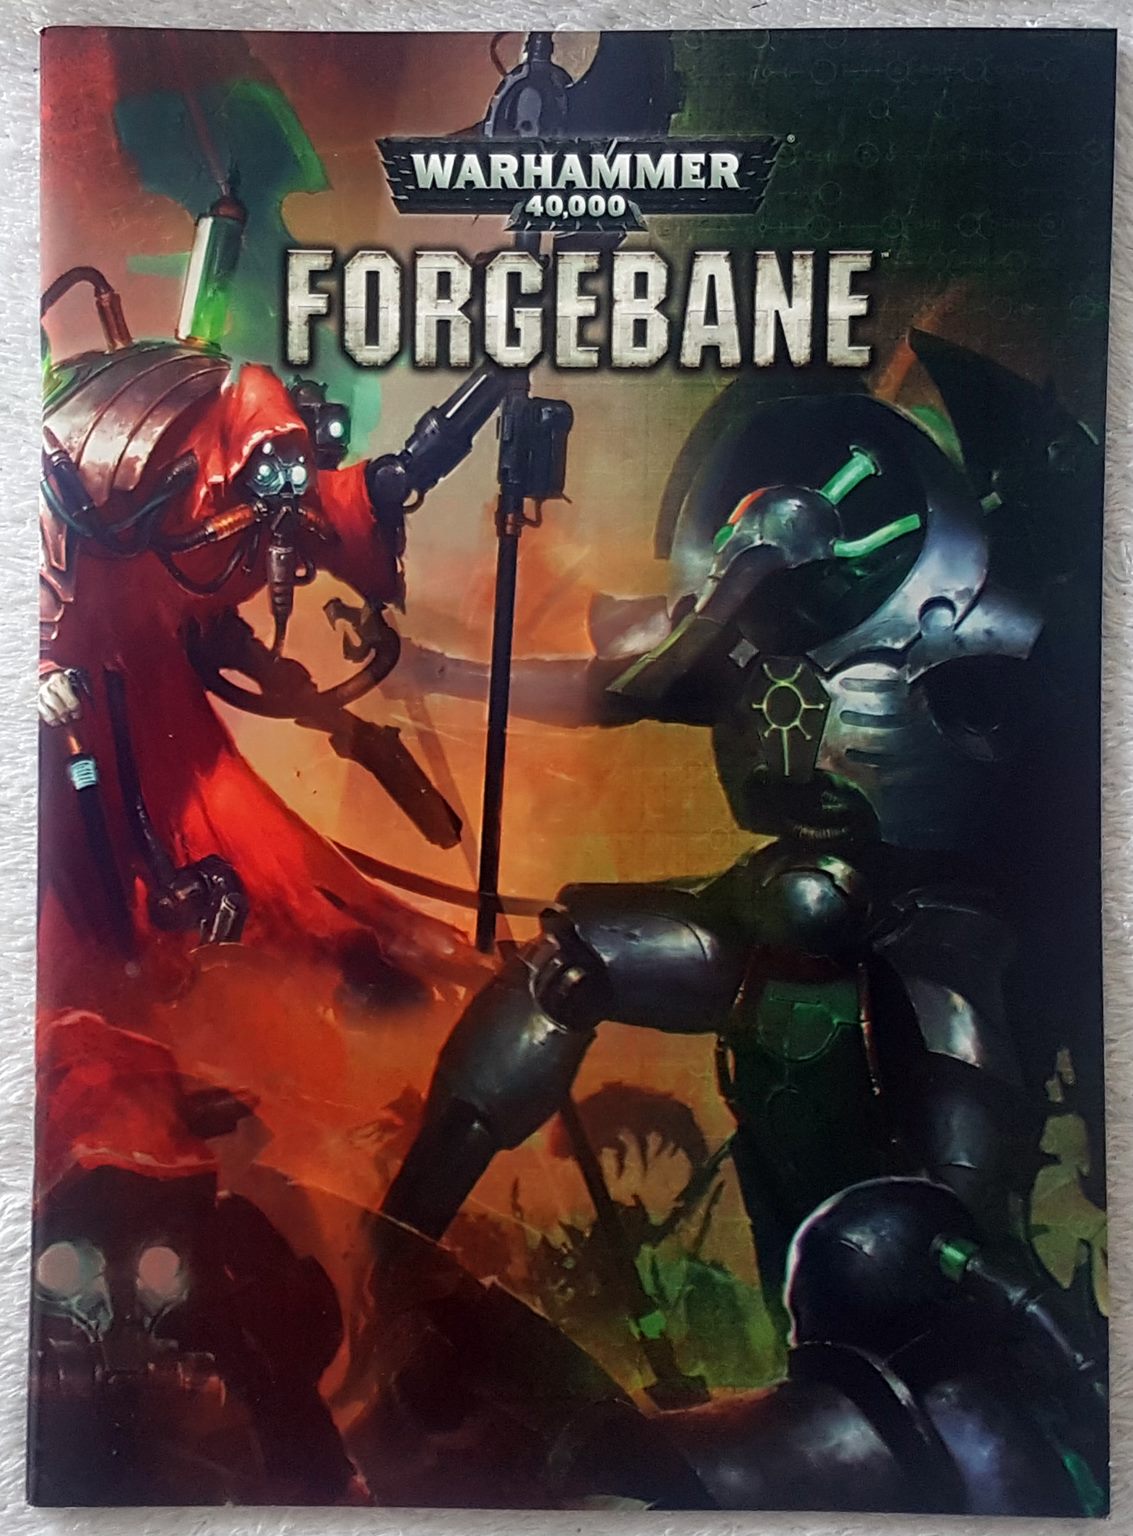 Warhammer 40,000 Forgebane